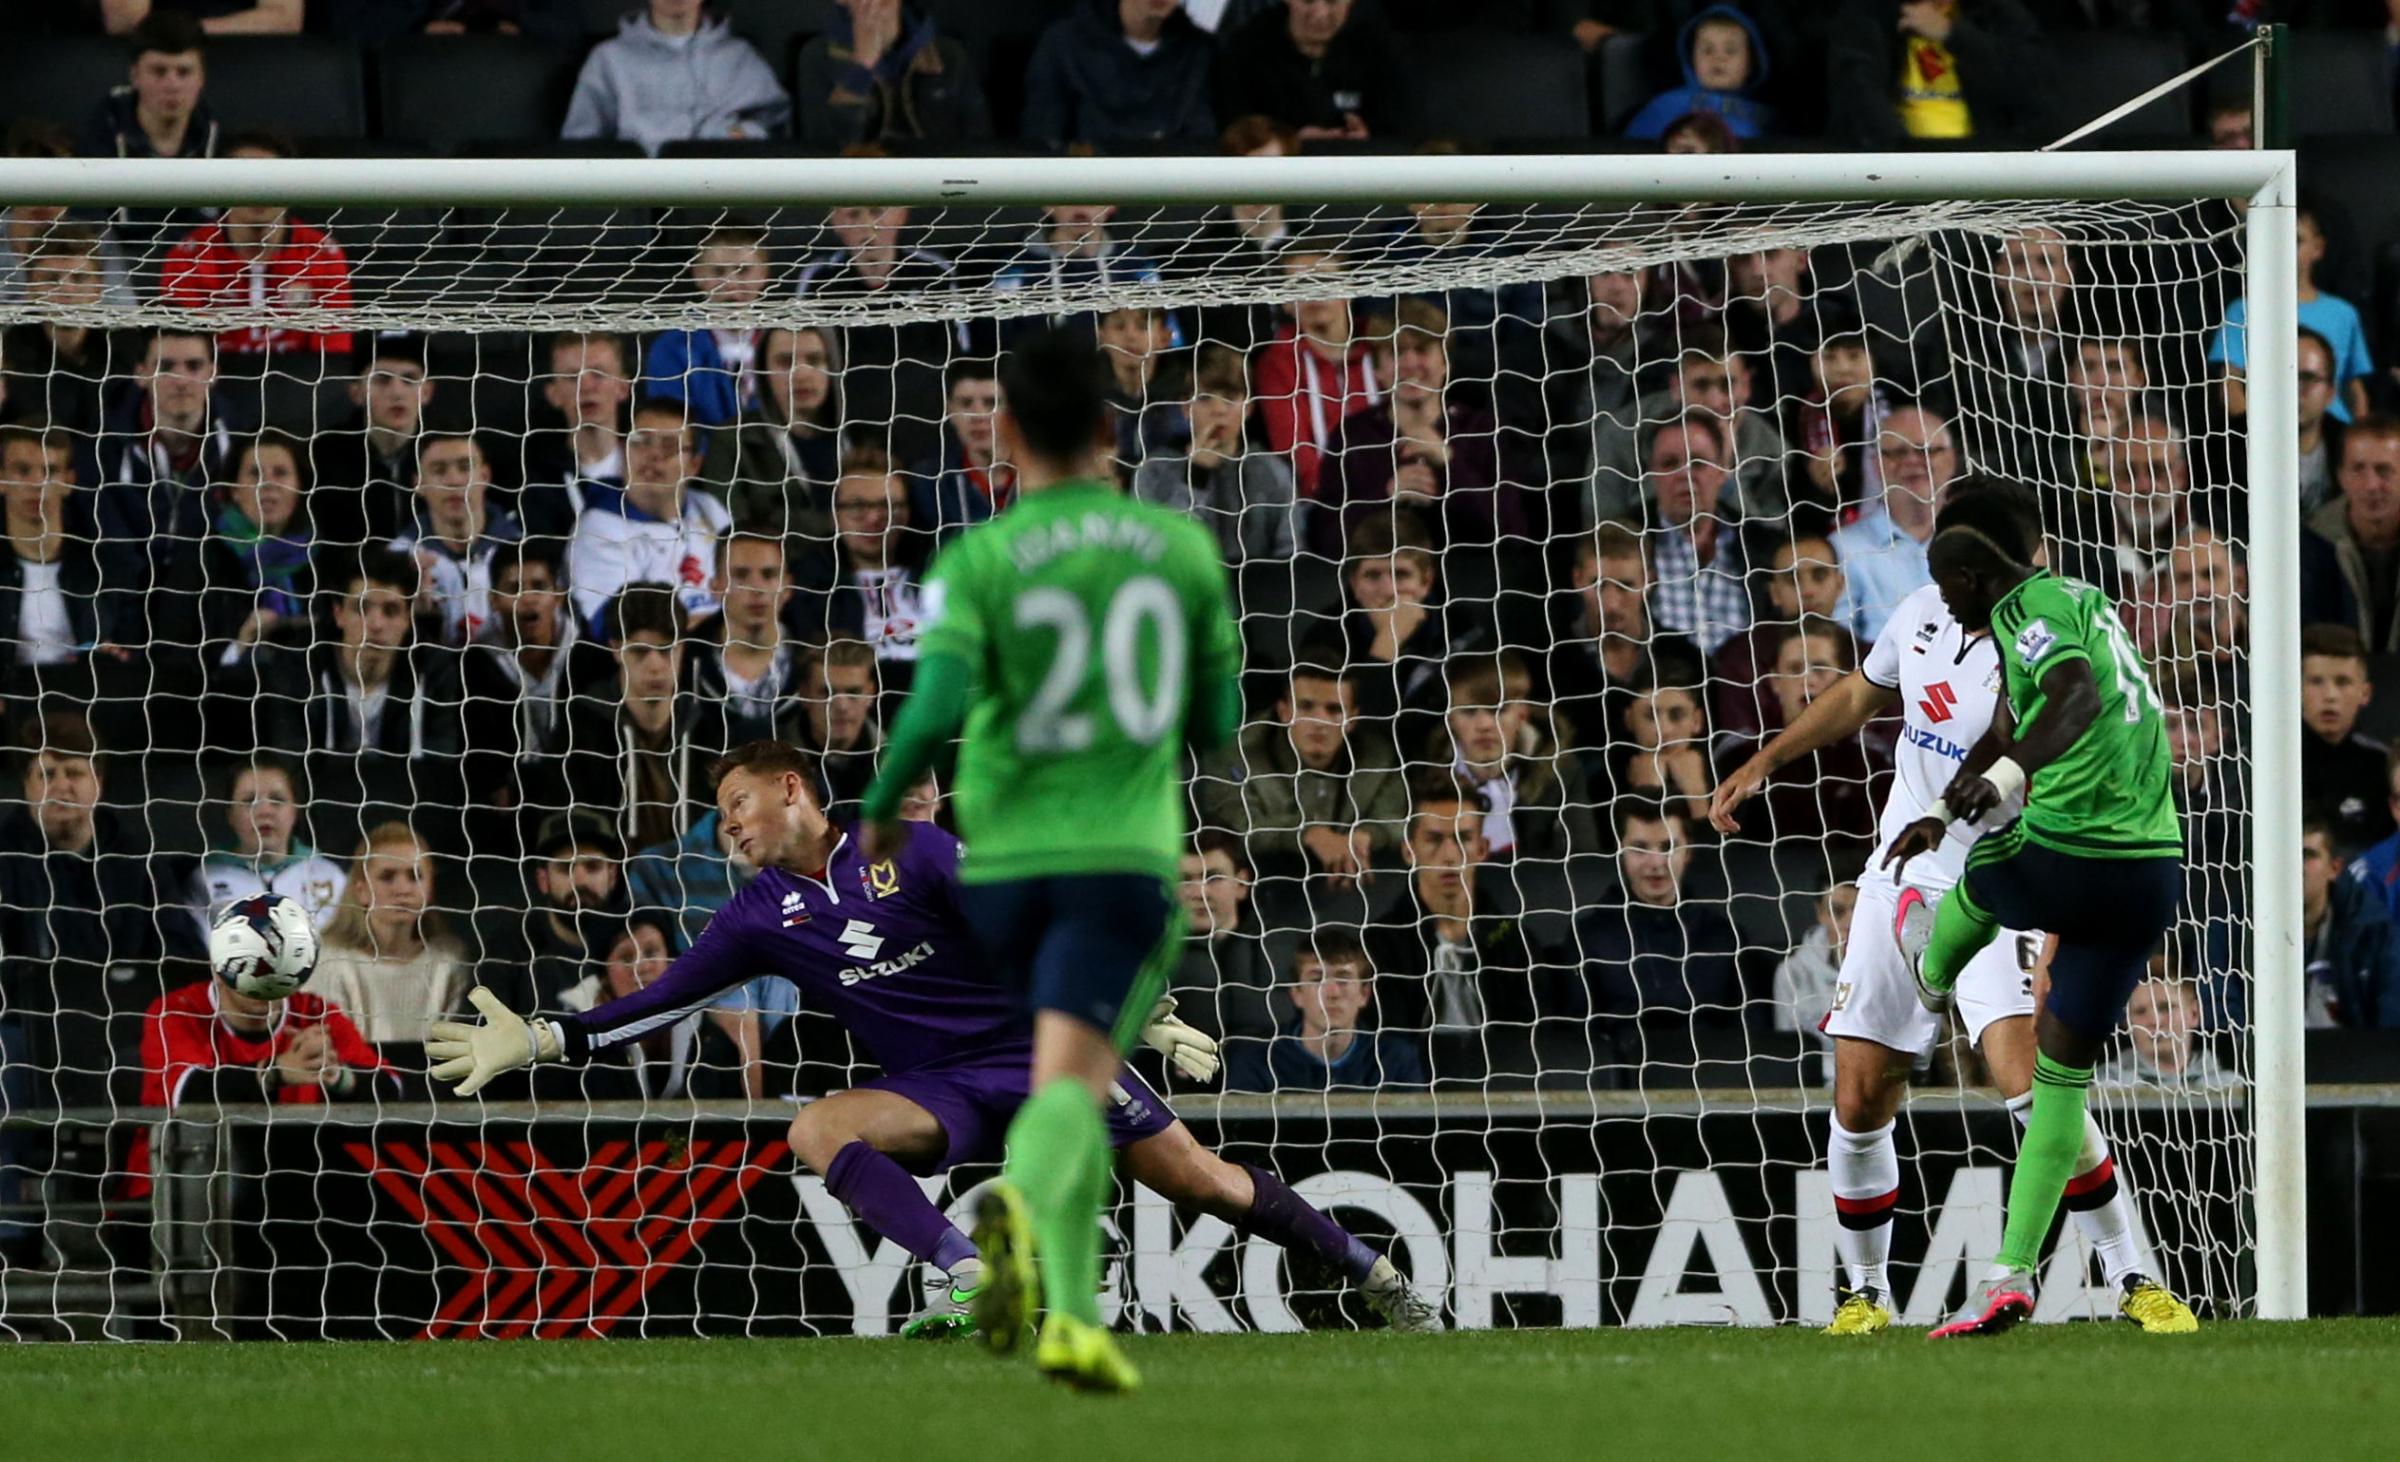 Sadio Mane scores in Southampton's 6-0 win over MK Dons.